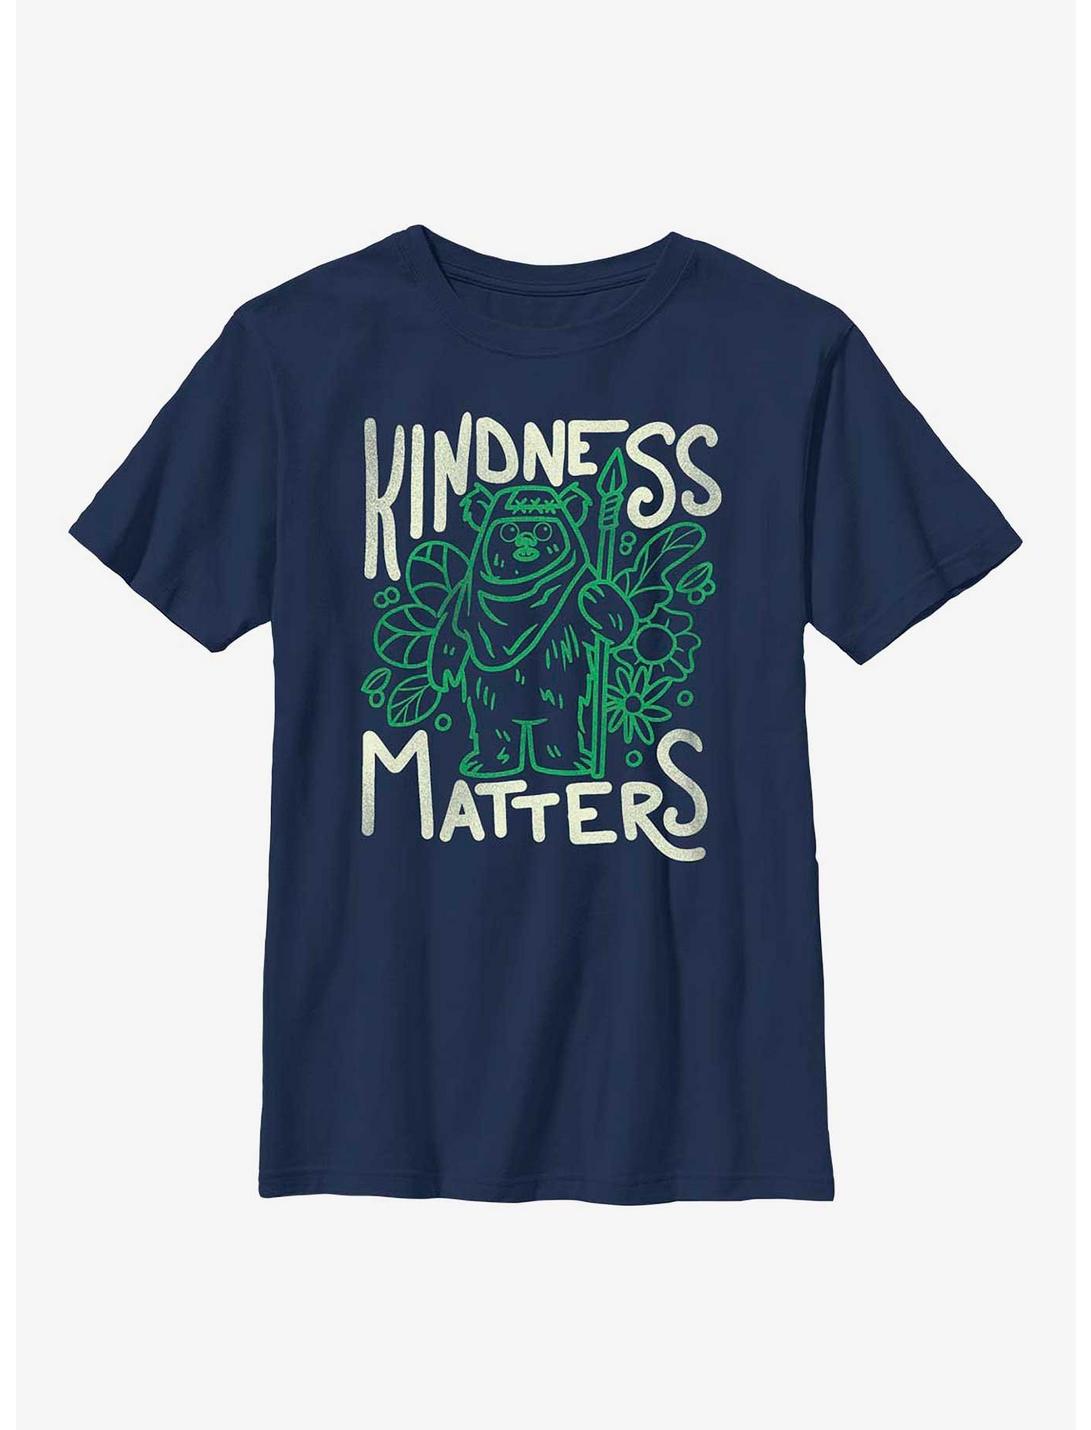 Star Wars Ewok Kindness Youth T-Shirt, NAVY, hi-res